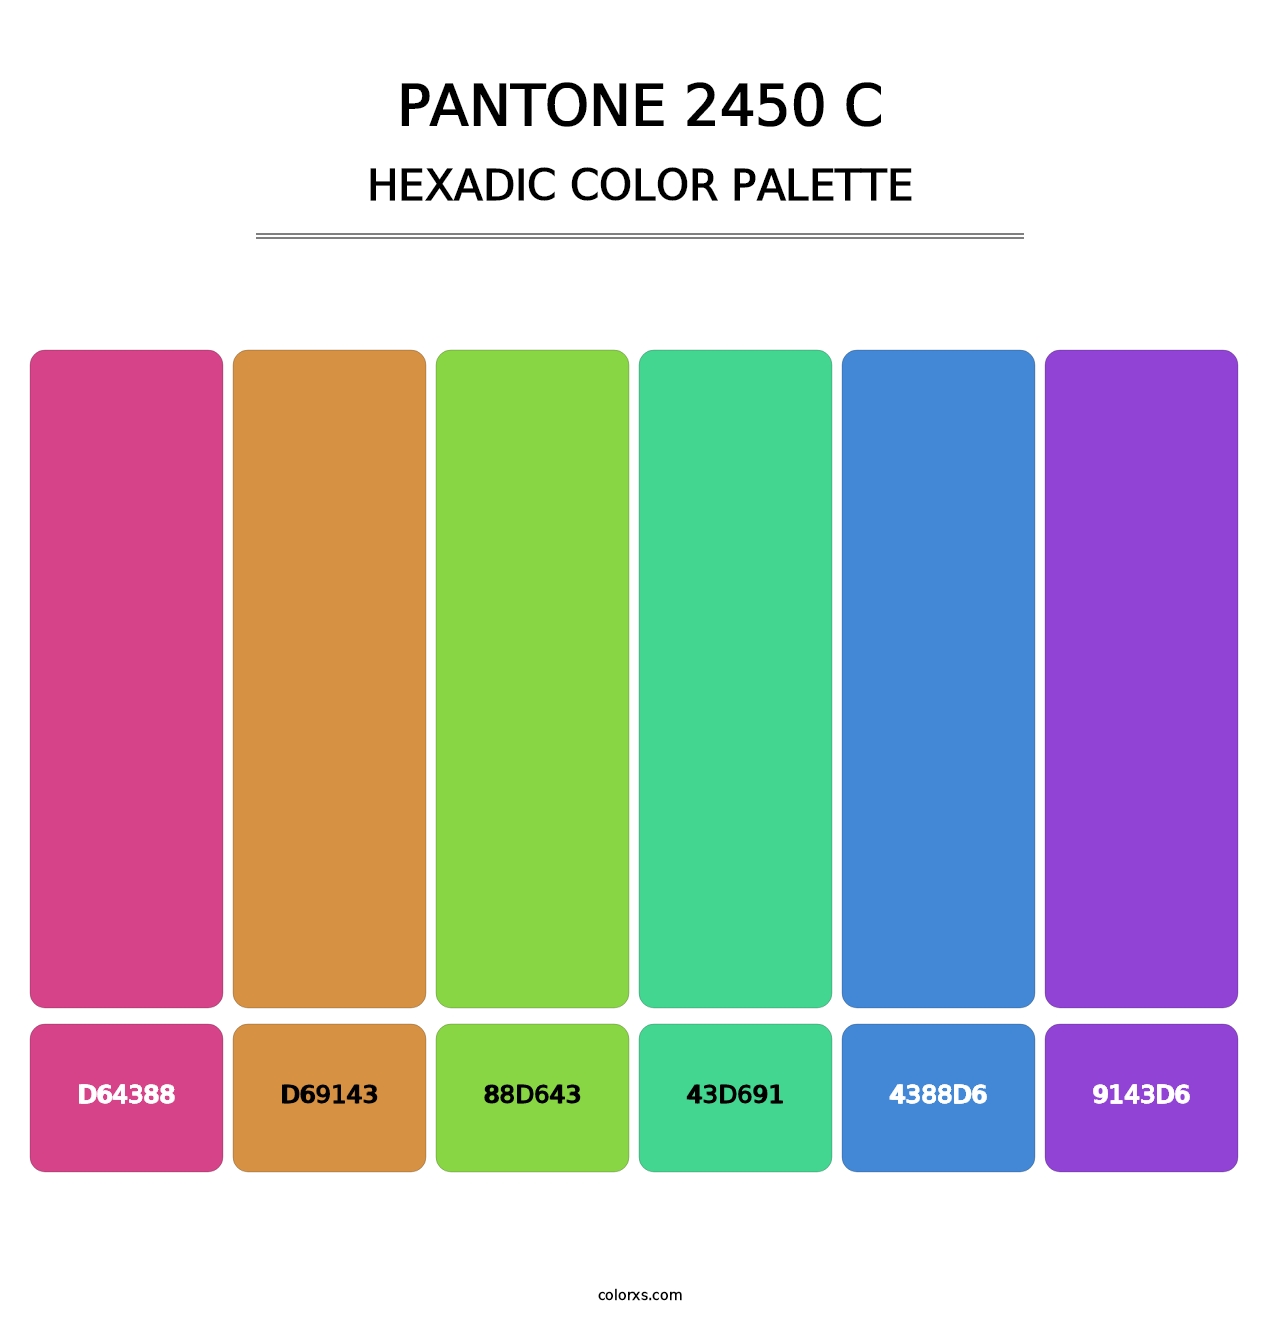 PANTONE 2450 C - Hexadic Color Palette